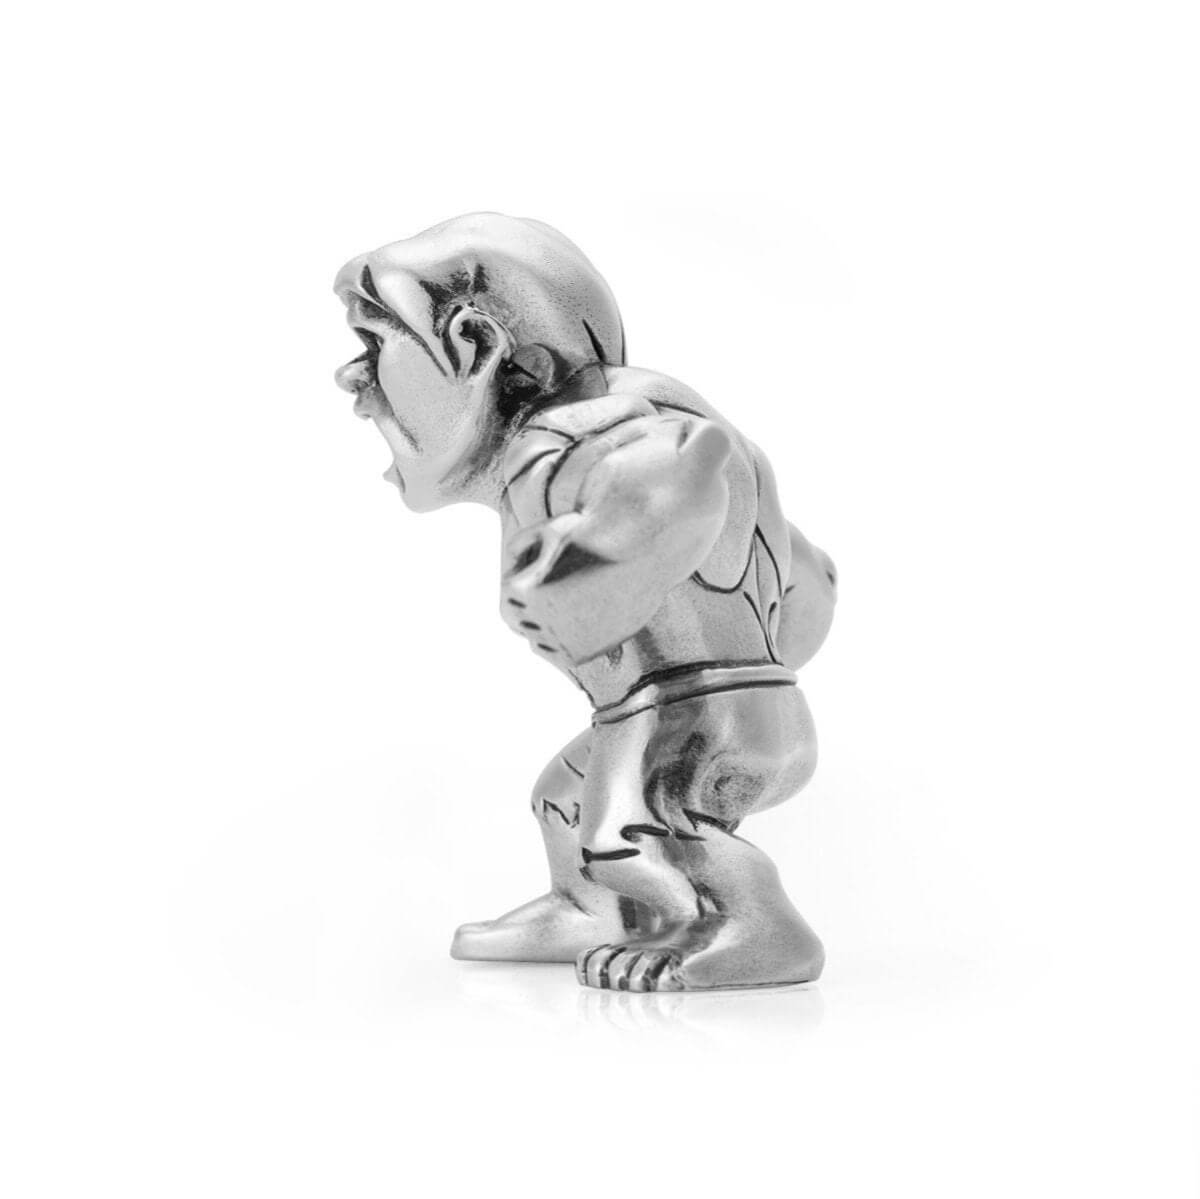 Hulk Miniature Figurine - Marvel Collectible gift